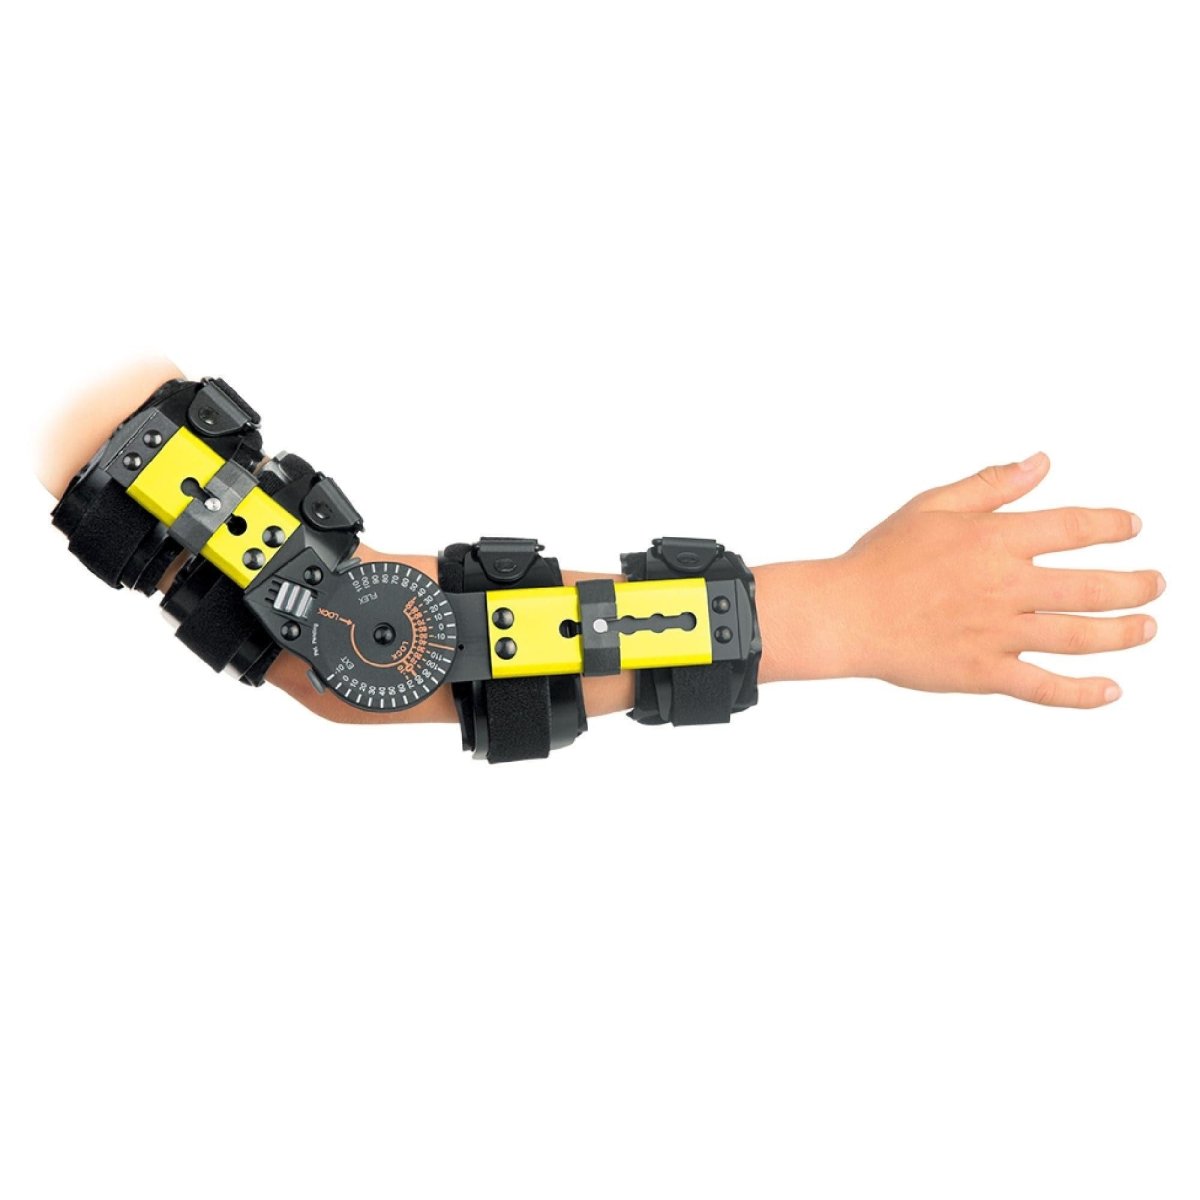 Elbow Wrist Bracing – Breg, Inc.